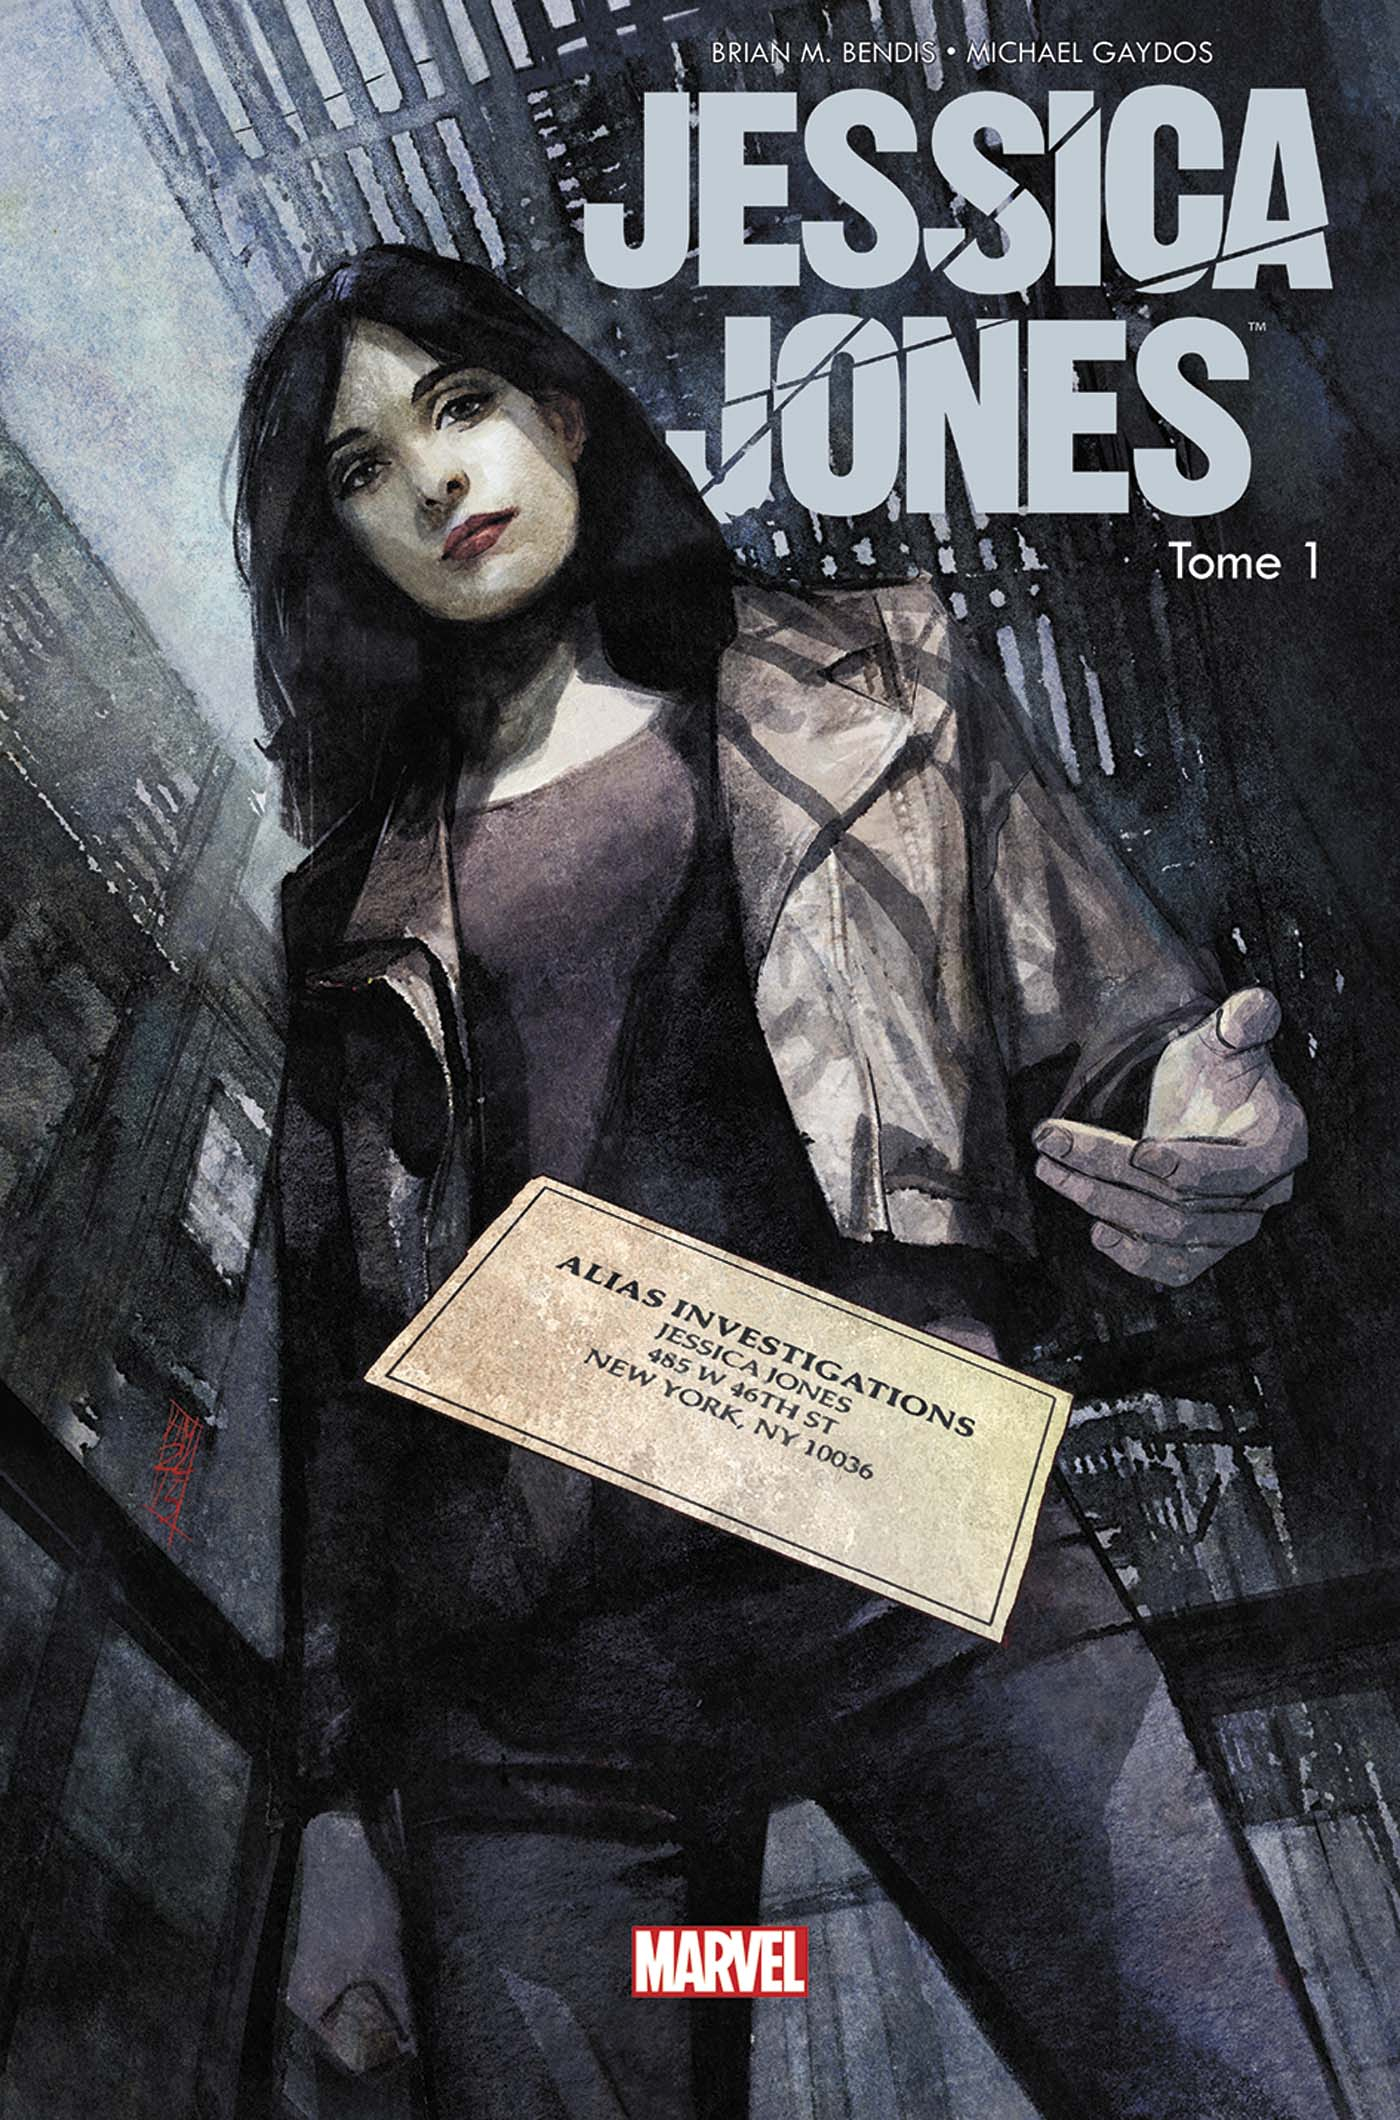 Jessica Jones All New Different Tome 1 (VF)